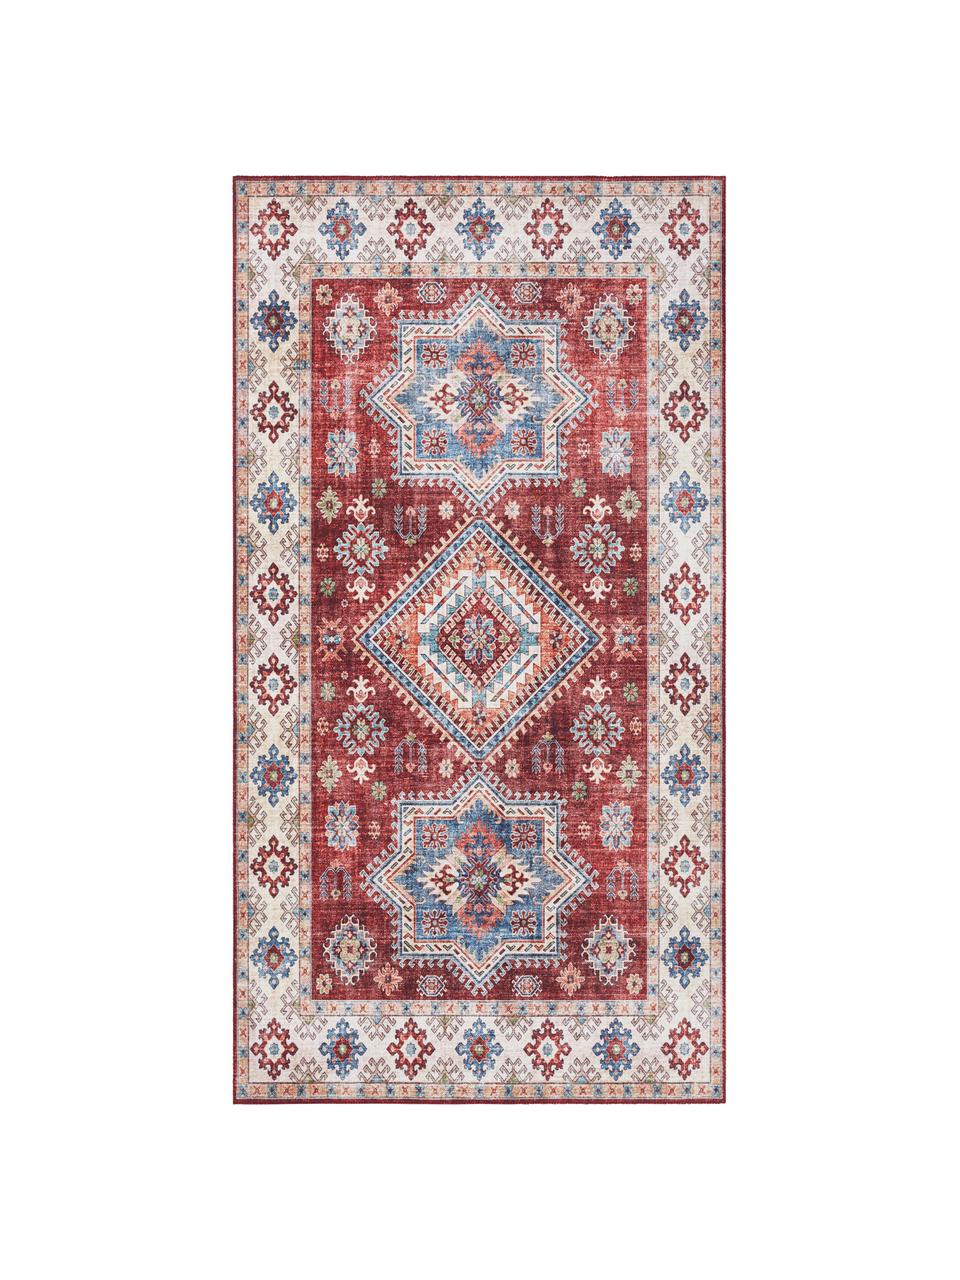 Teppich Gratia im Vintage Style, Rubinrot, Blau, B 200 x L 290 cm (Grösse L)